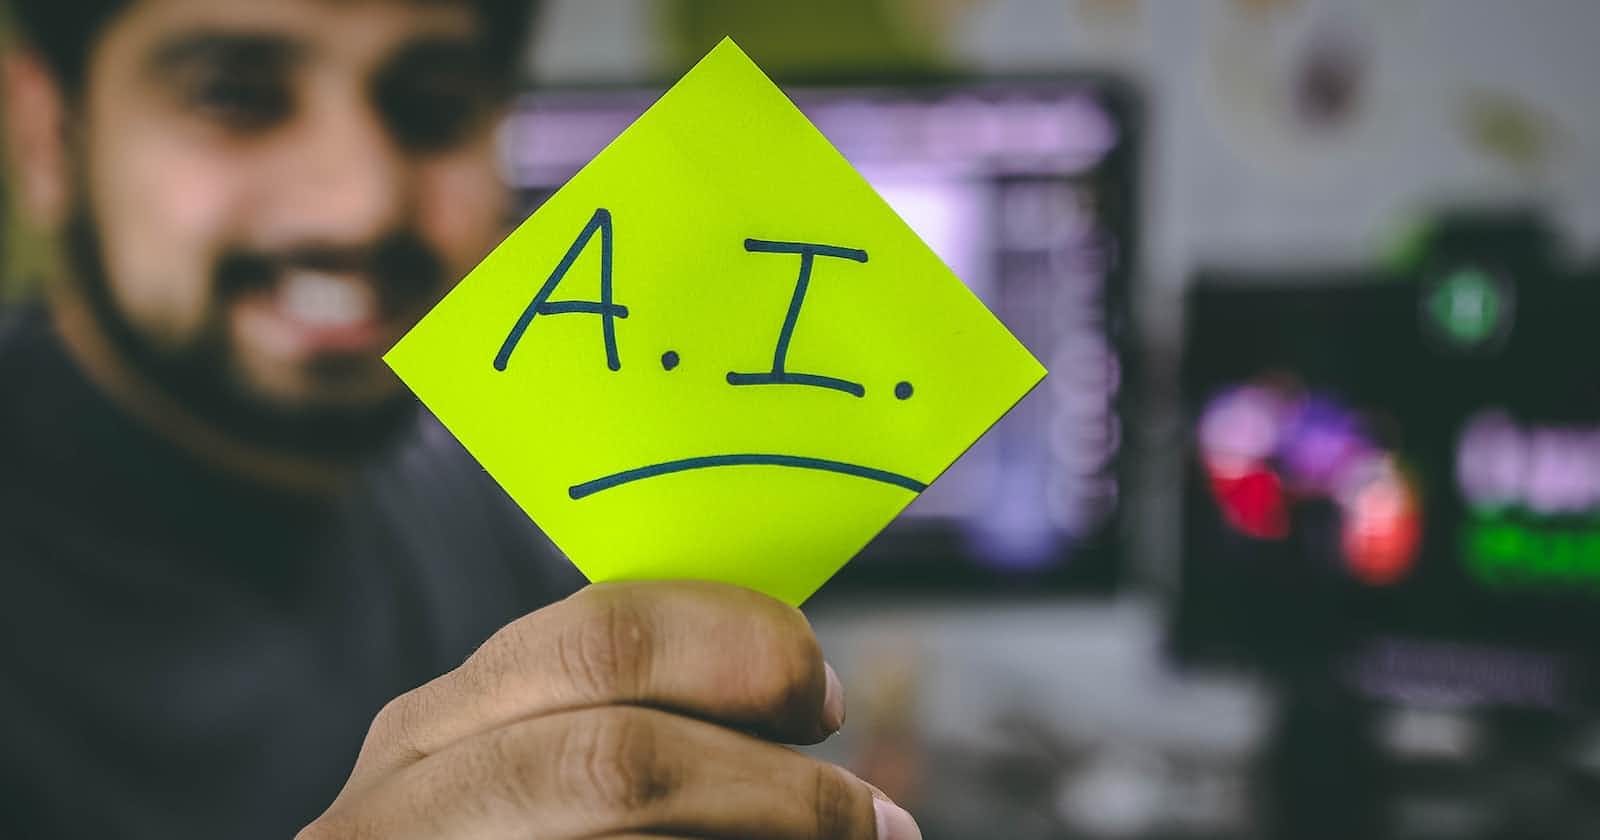 AI vs Humans: The Future of Work